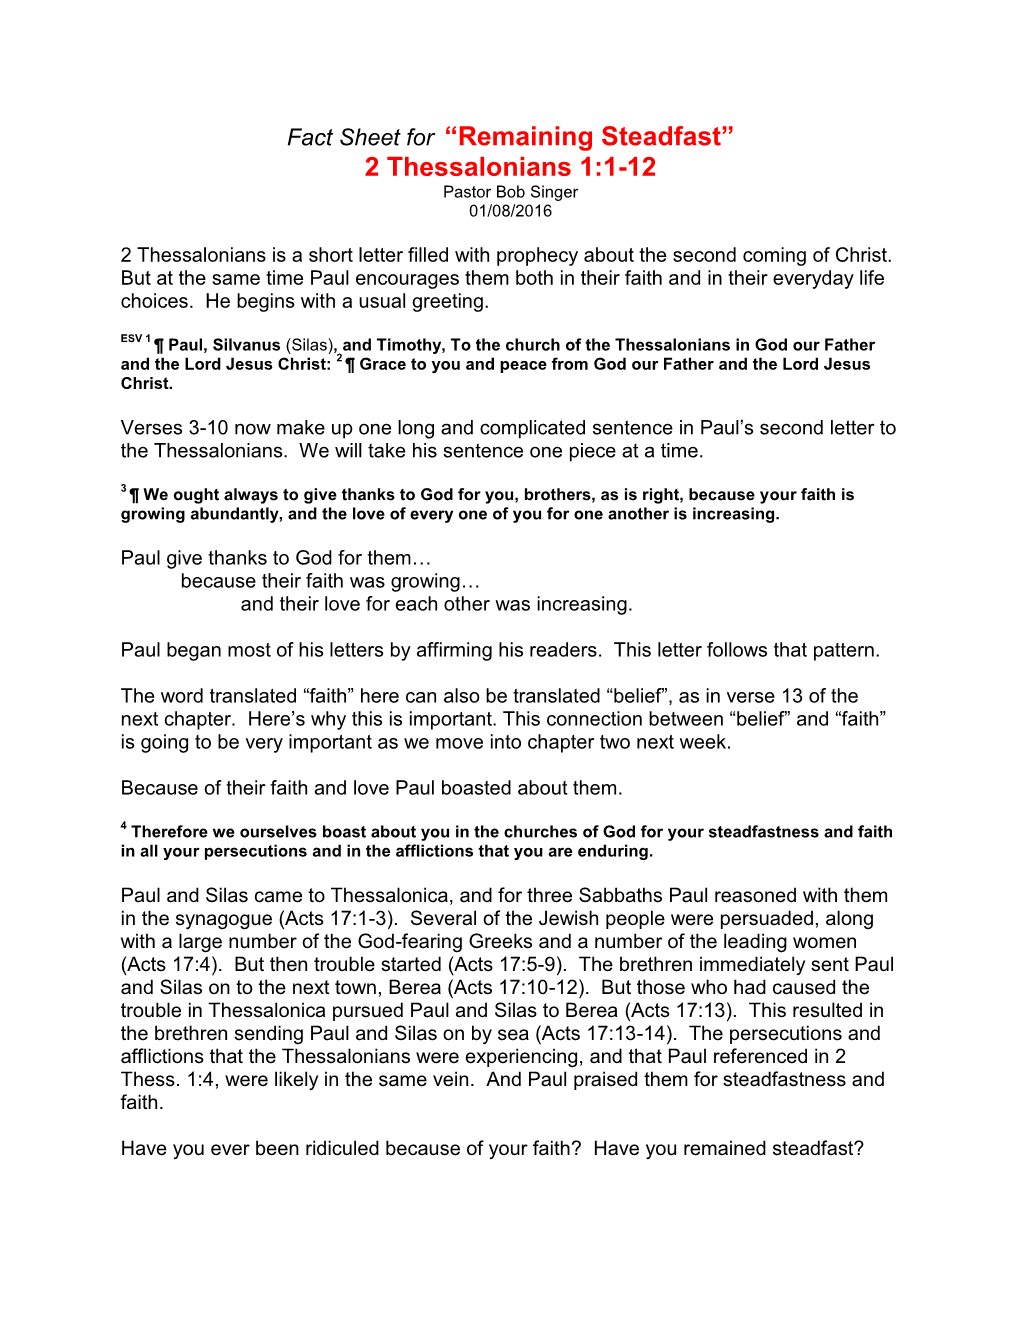 Fact Sheet for “Remaining Steadfast” 2 Thessalonians 1:1-12 Pastor Bob Singer 01/08/2016